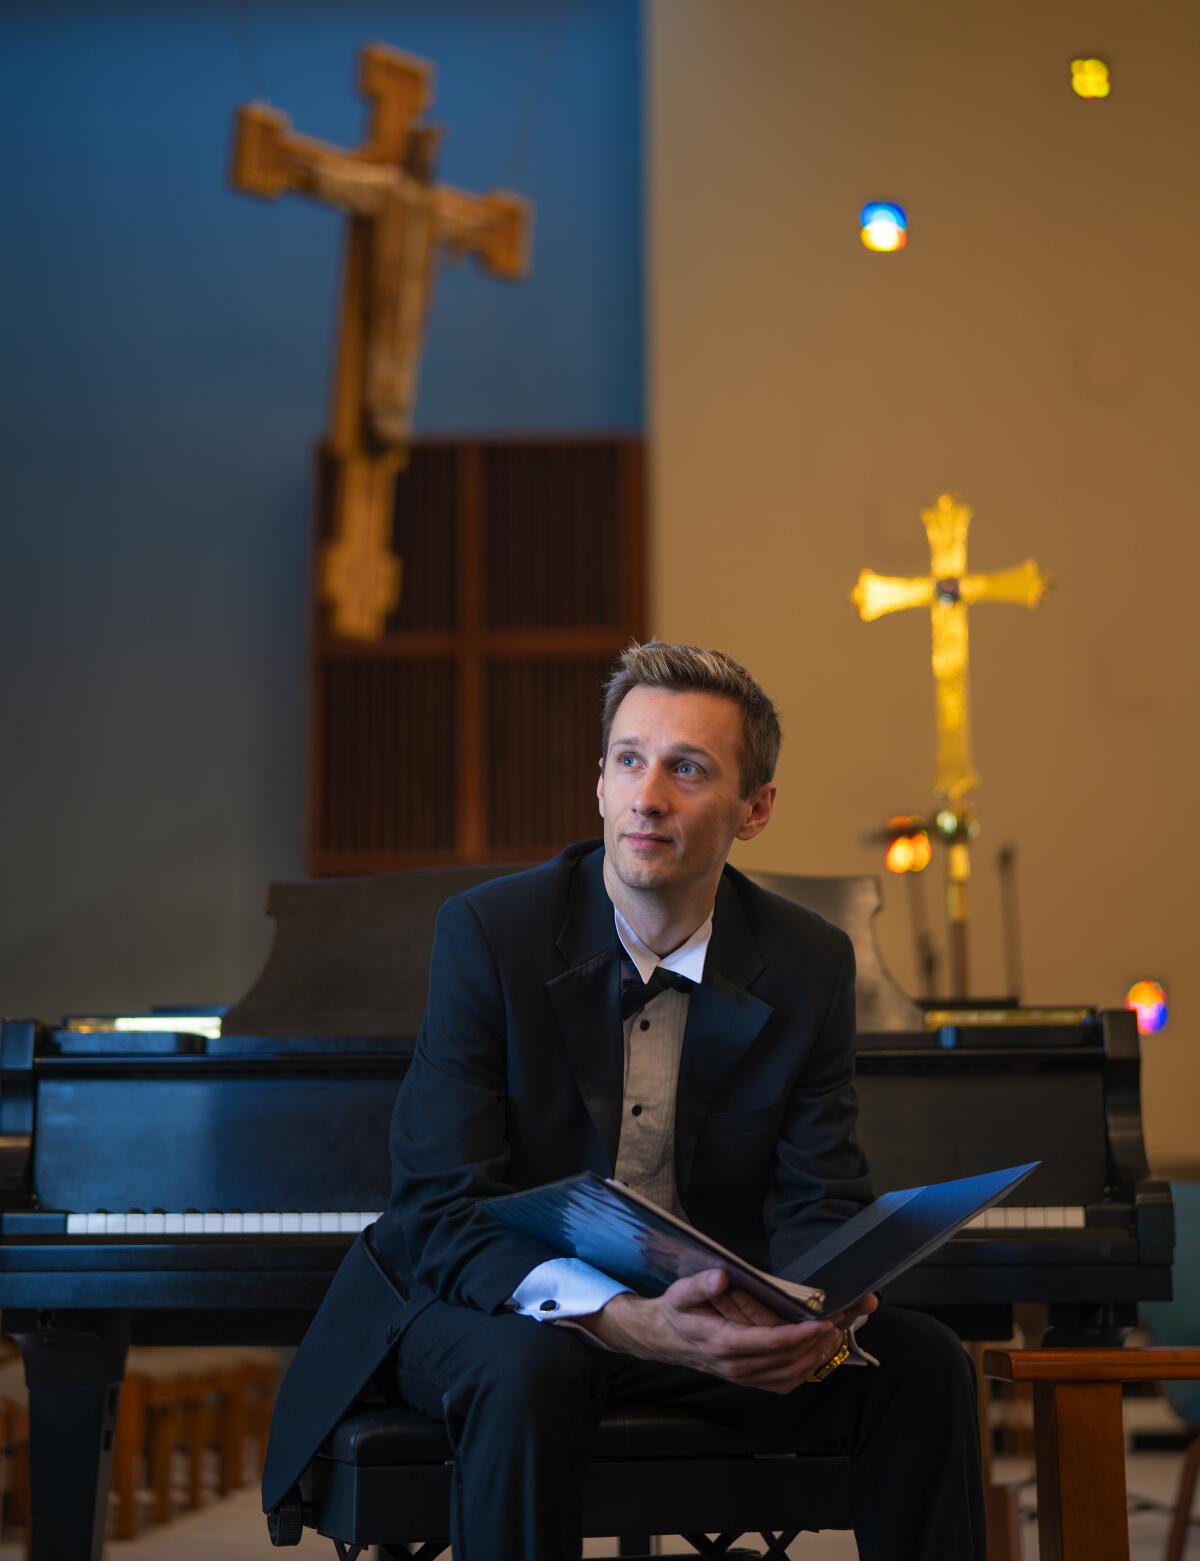 John-Luke Addison is the music director of St. Bartholomew's Episcopal Church.  